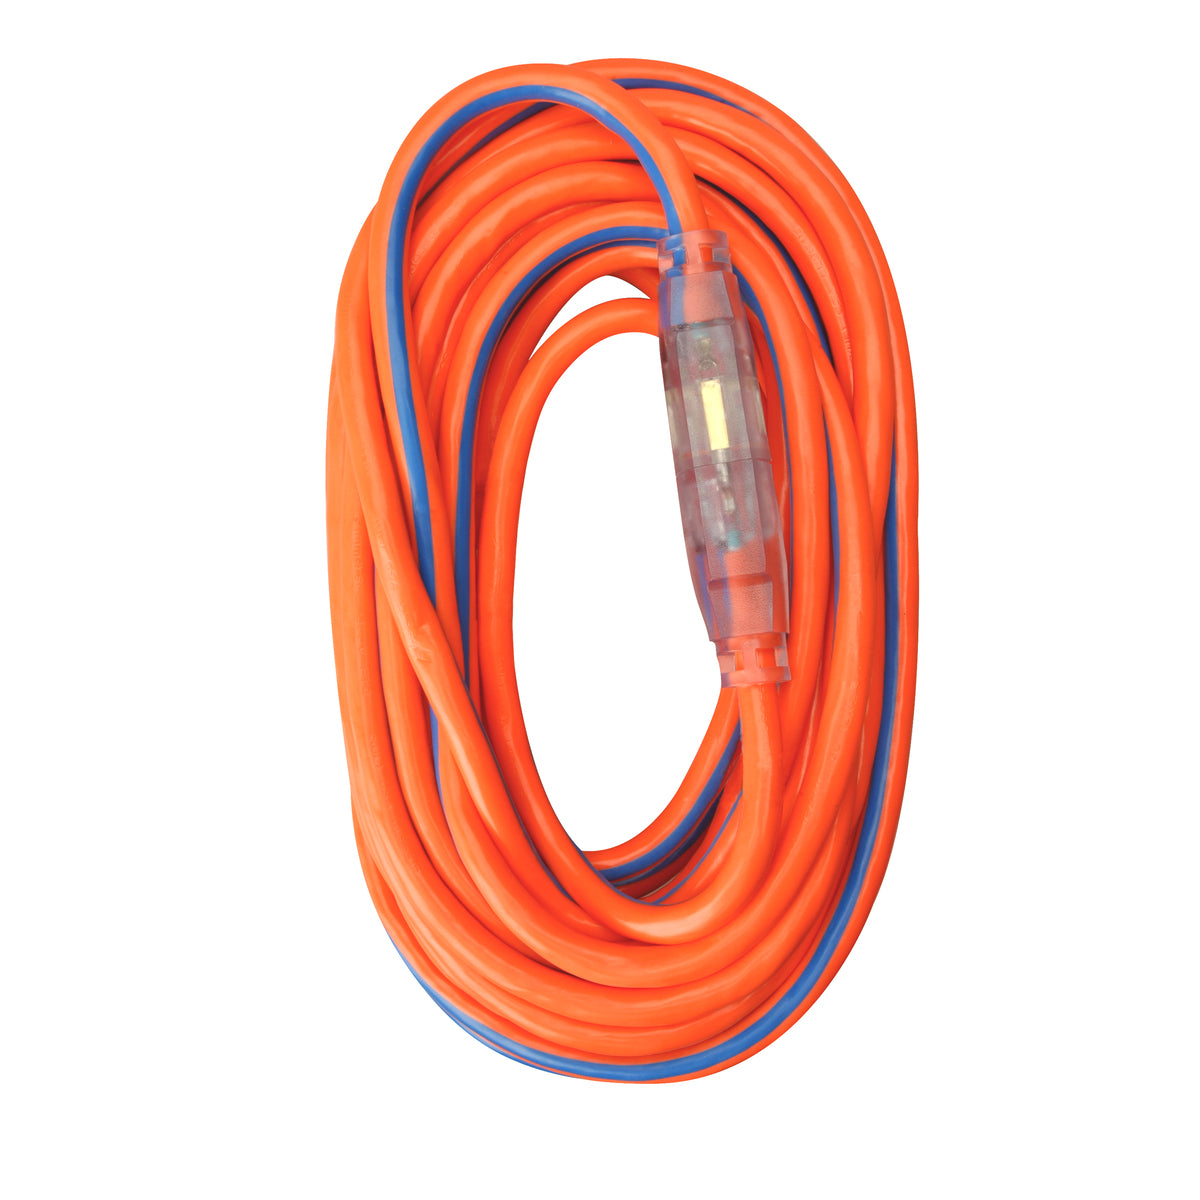 Extension cord 12/3 SJTW Cool Orange/Blue – RDSI